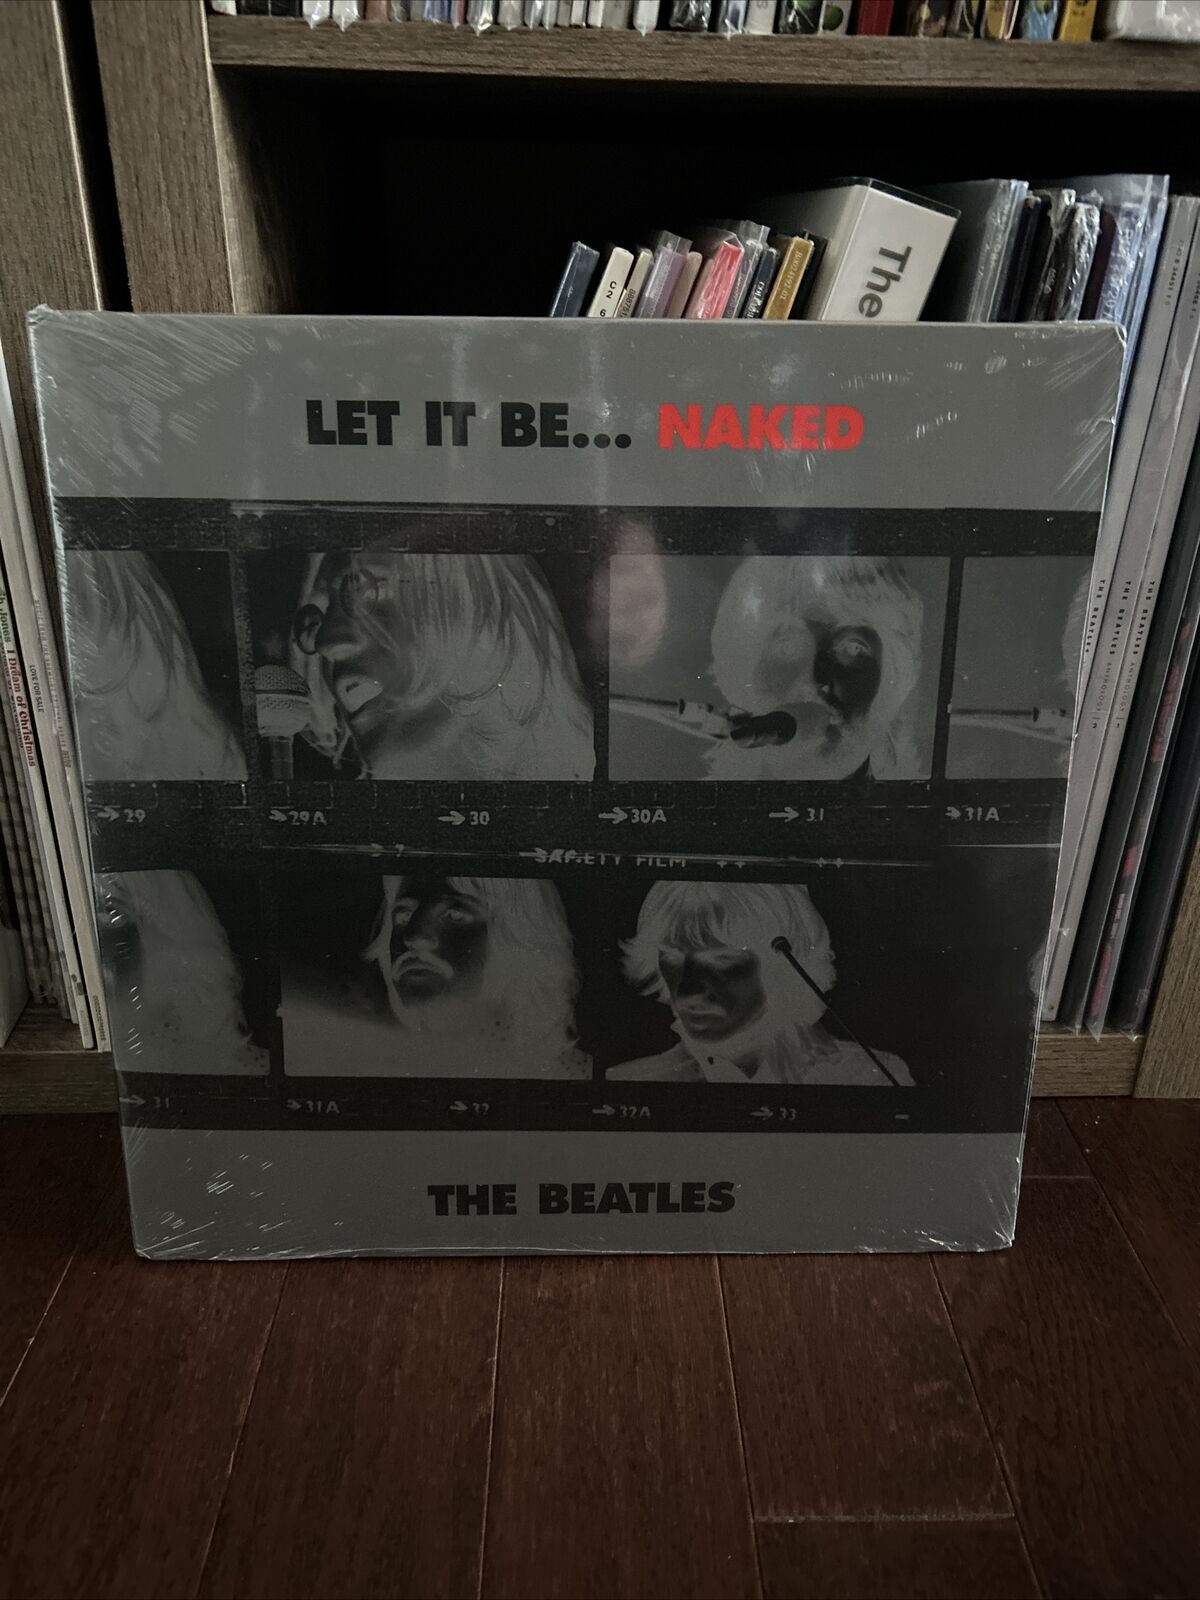 Stramme bacon blandt Let It Be: Naked (2 Lps) [LP] by Beatles (The) (Vinyl, Nov-2003, Parlophone  Records UK) for sale online | eBay